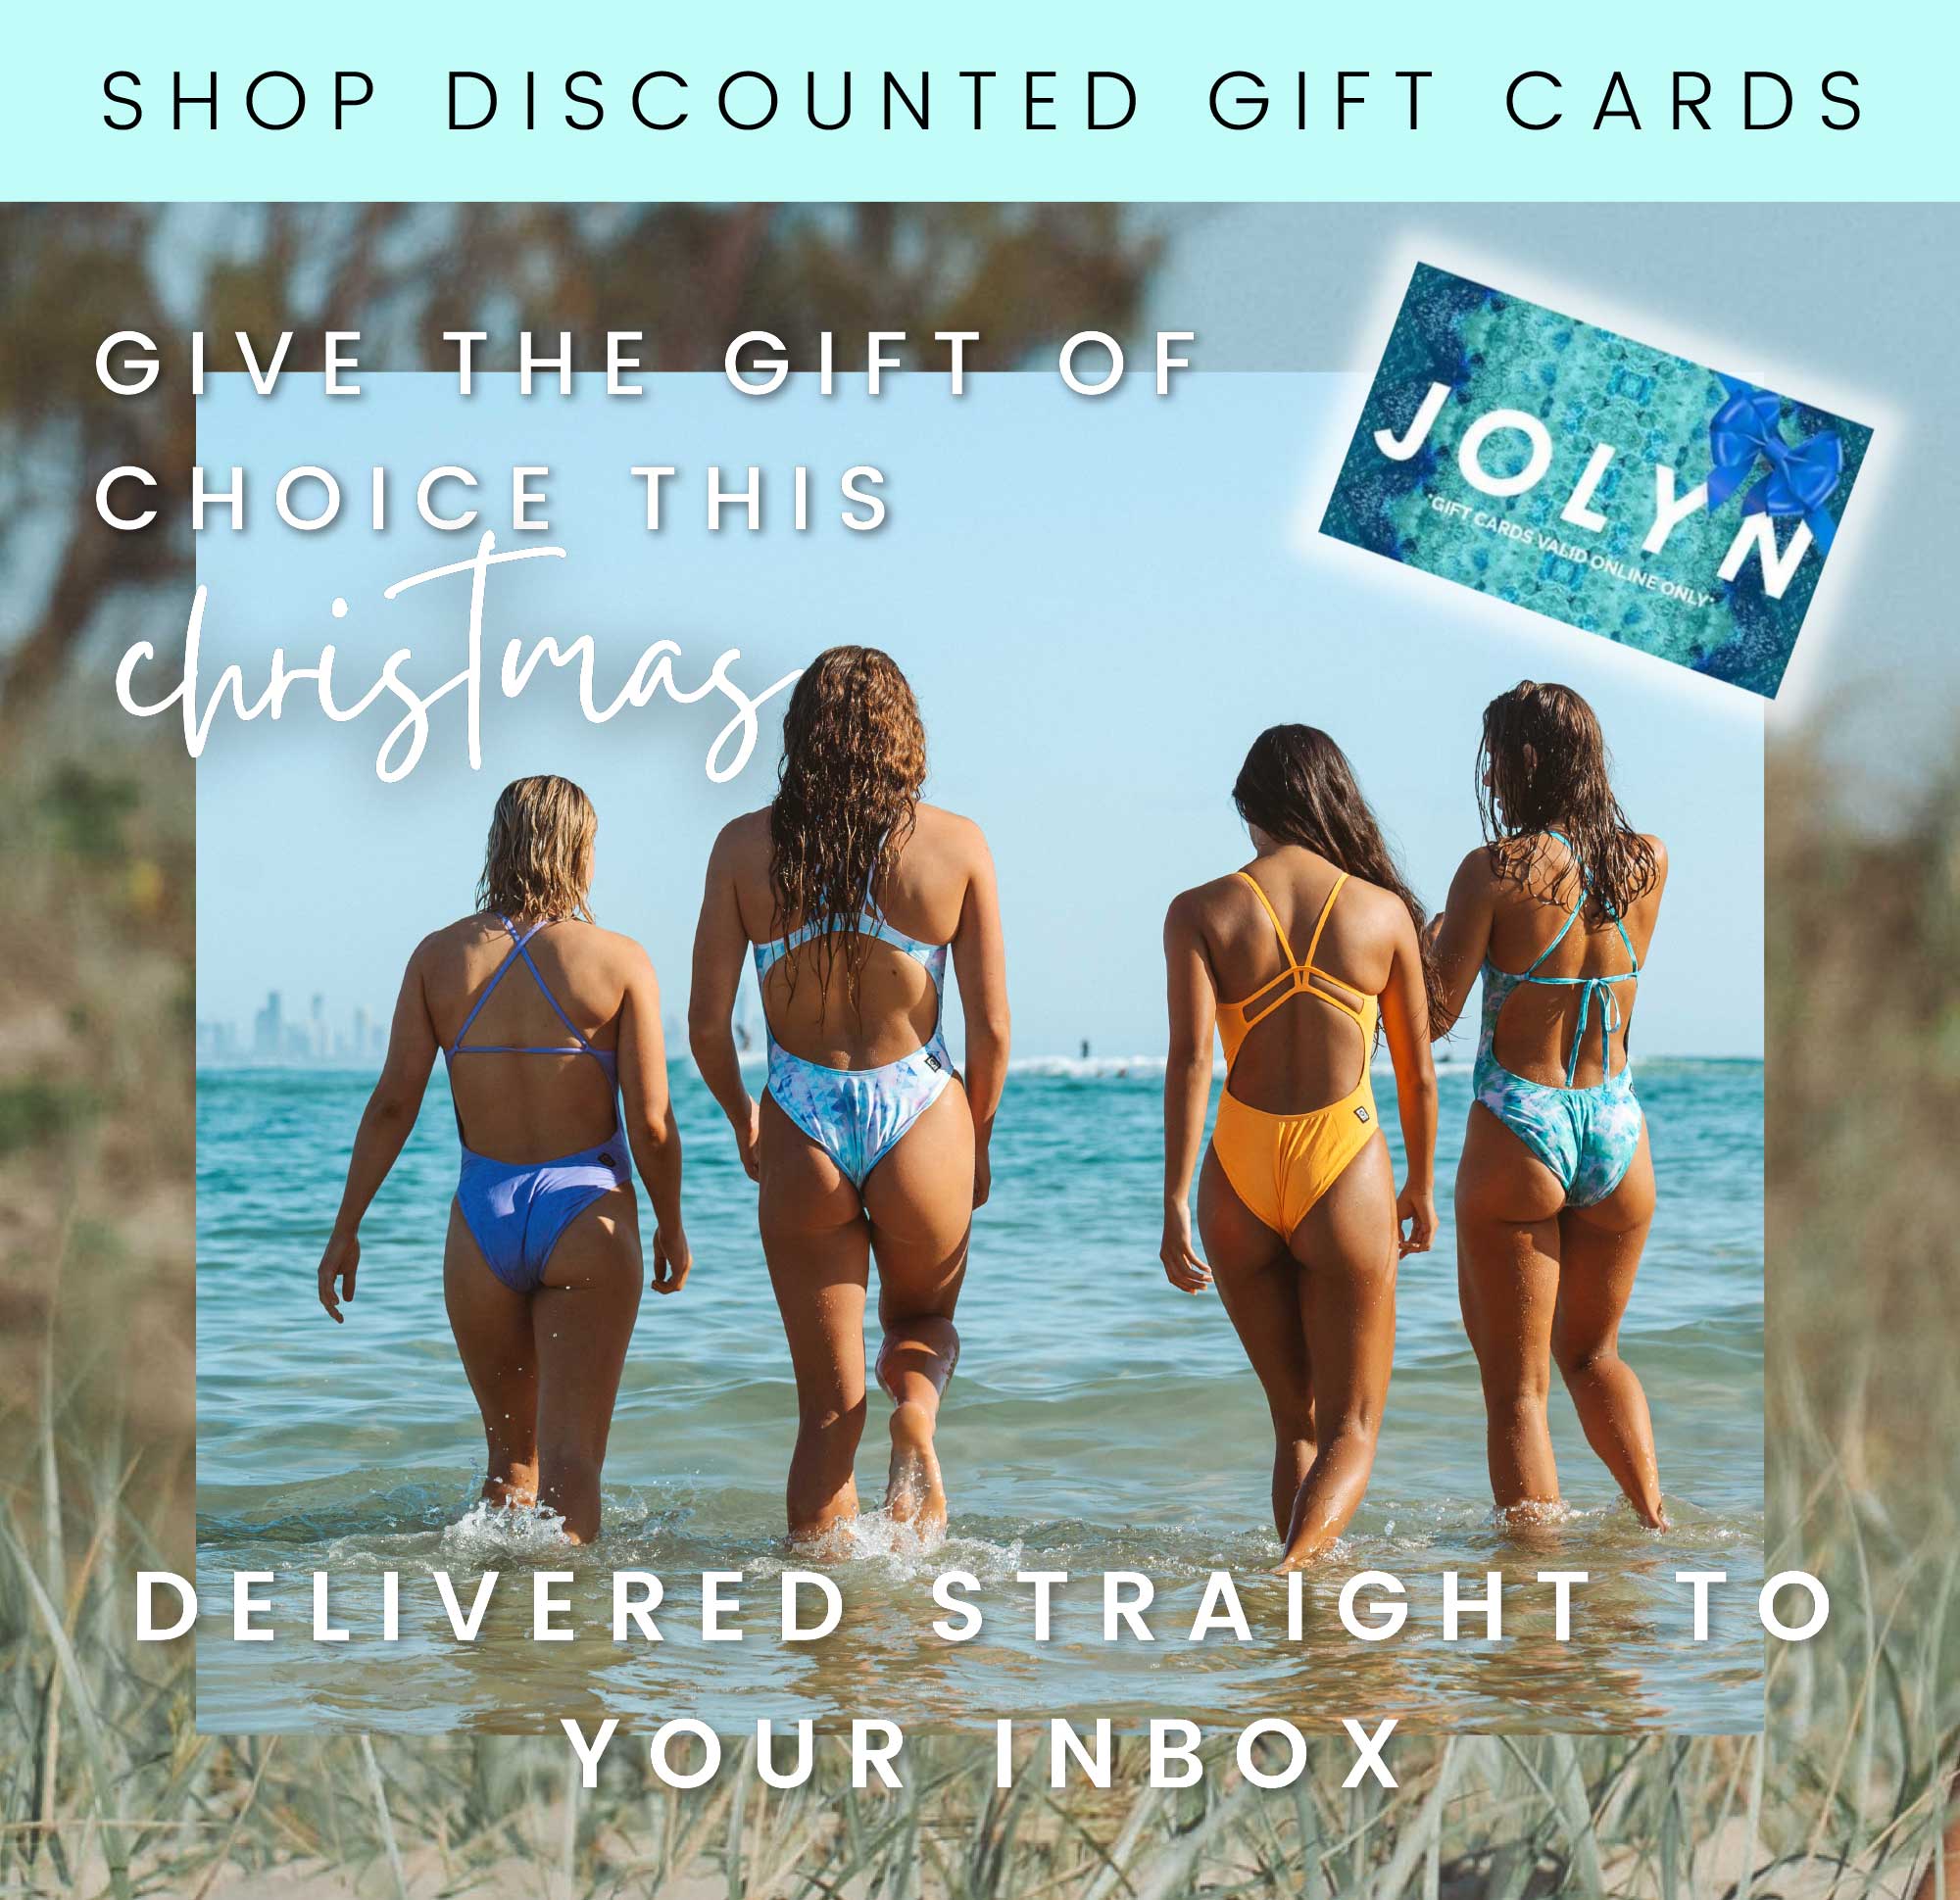 JOLYN Australia womens athletic swimwear shop gift cards 10% off